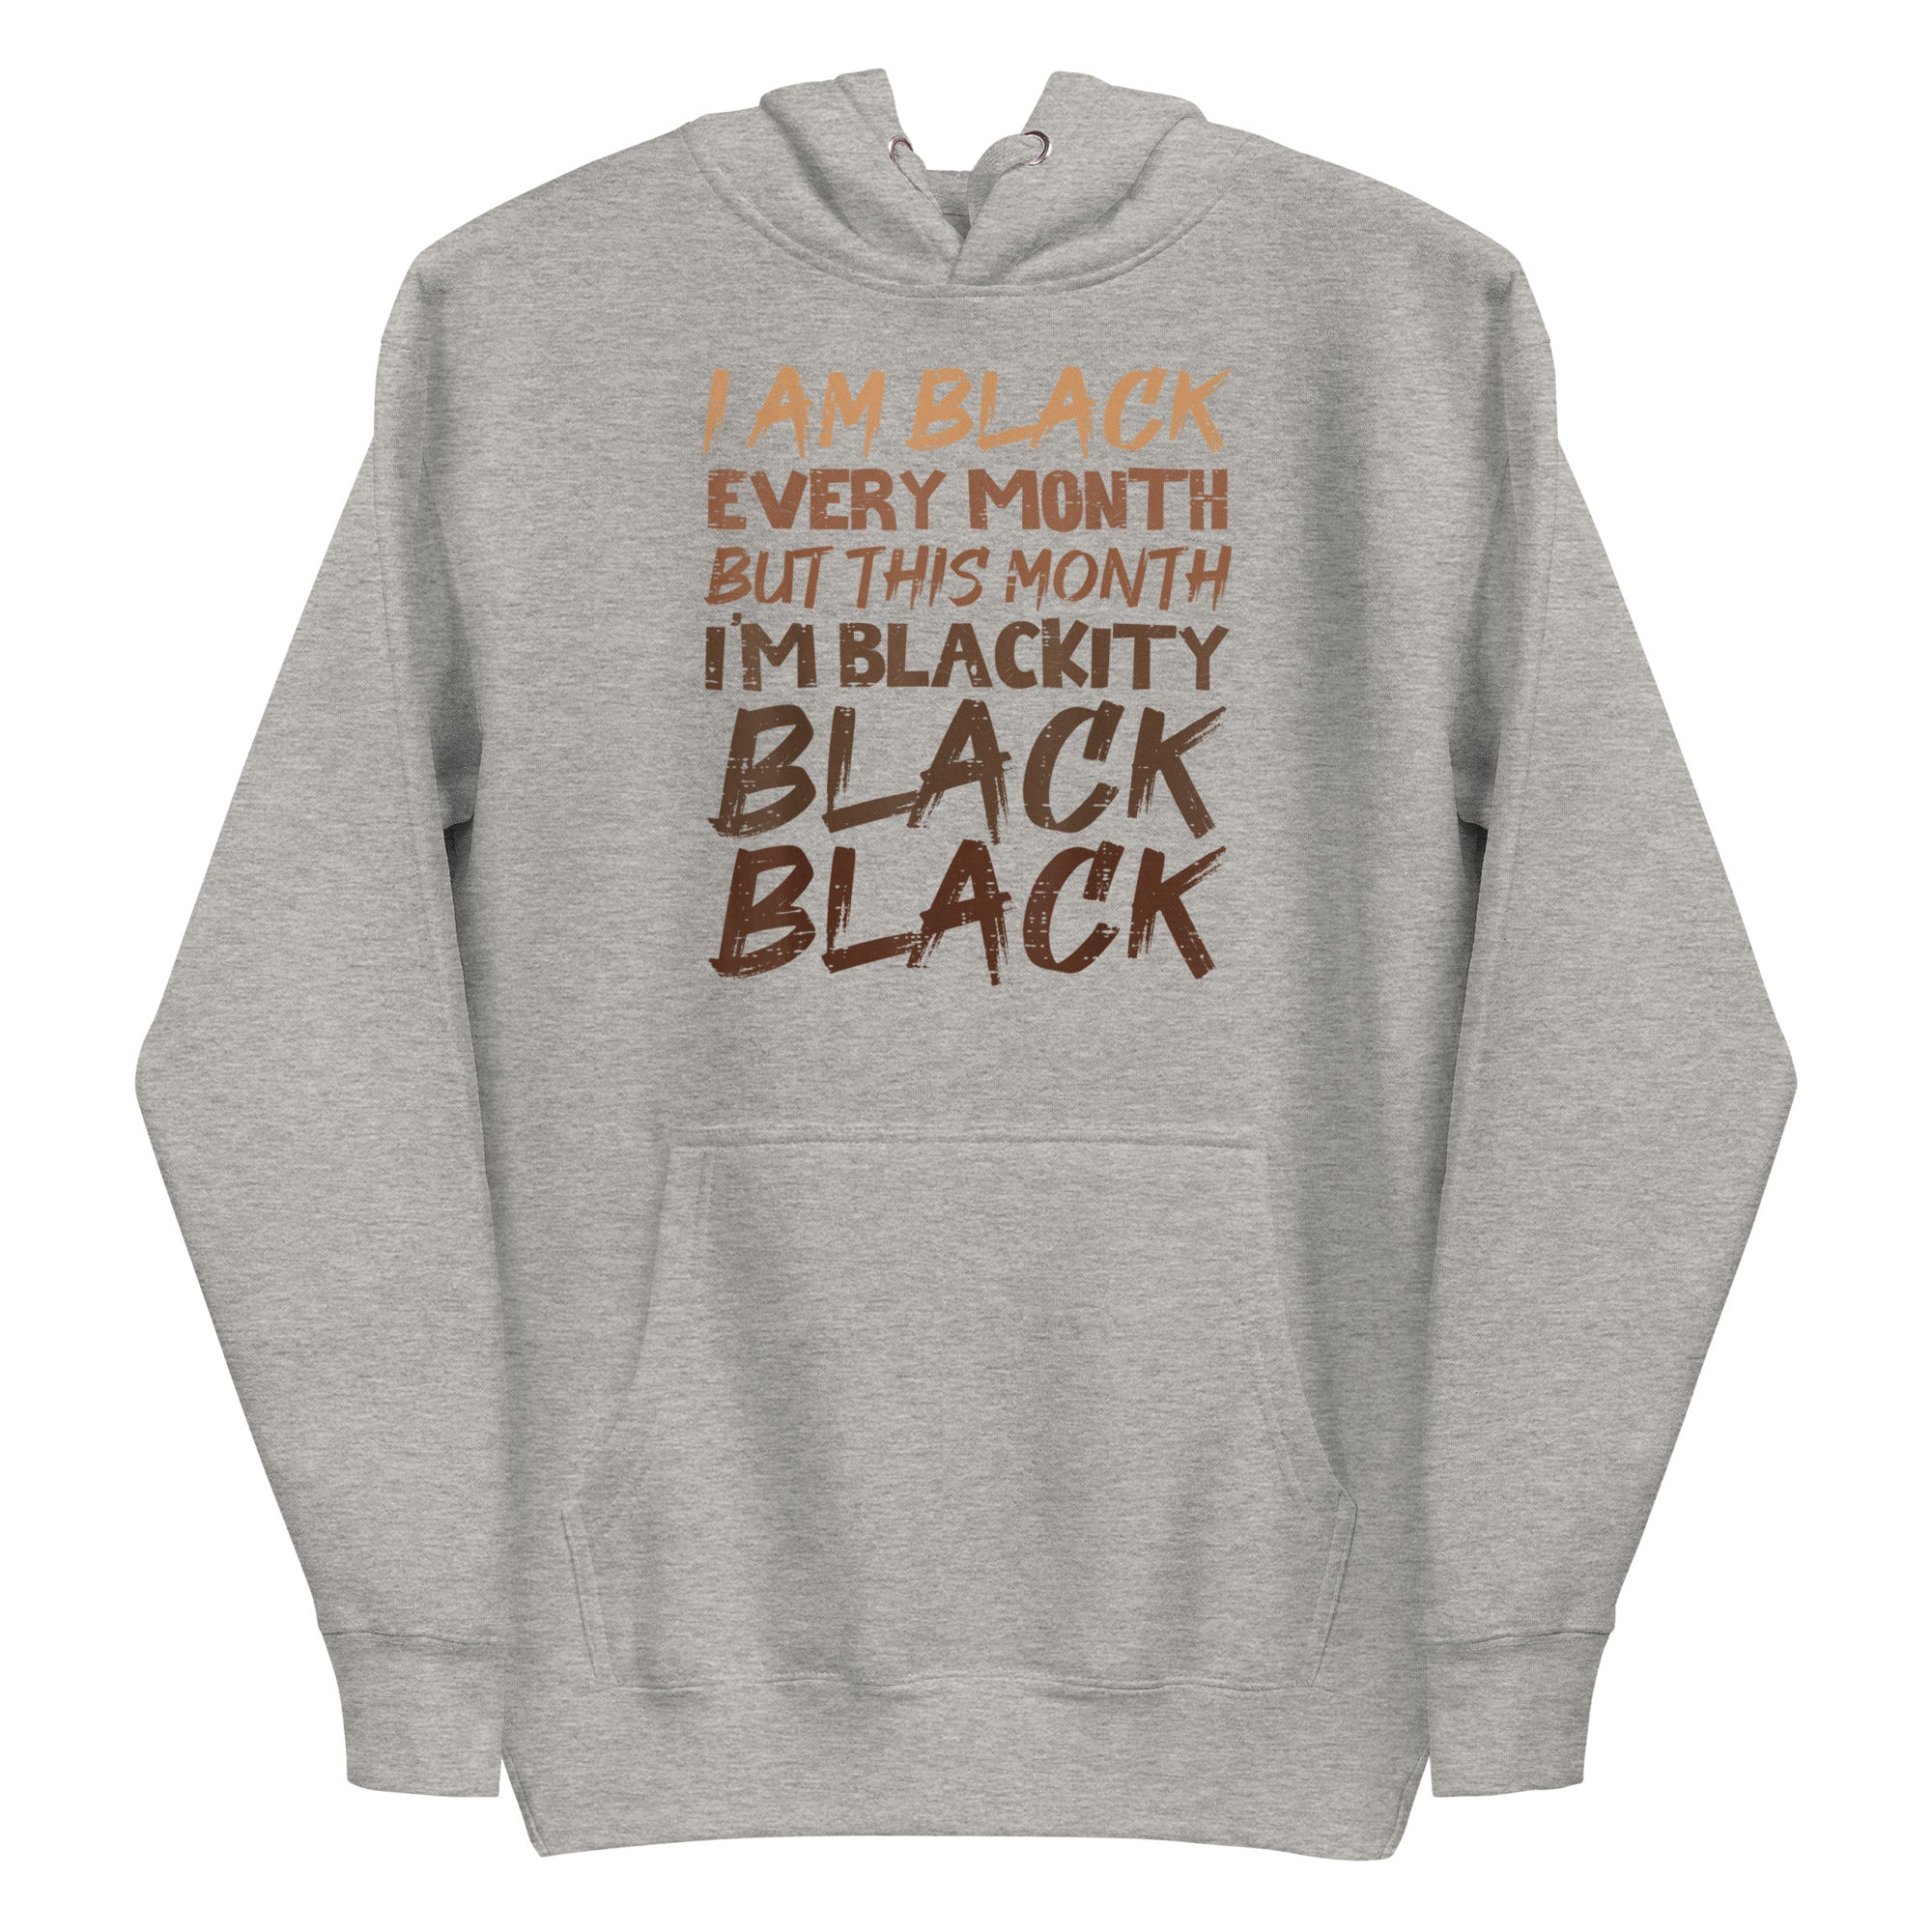 "I AM BLACK" Unisex Hoodie